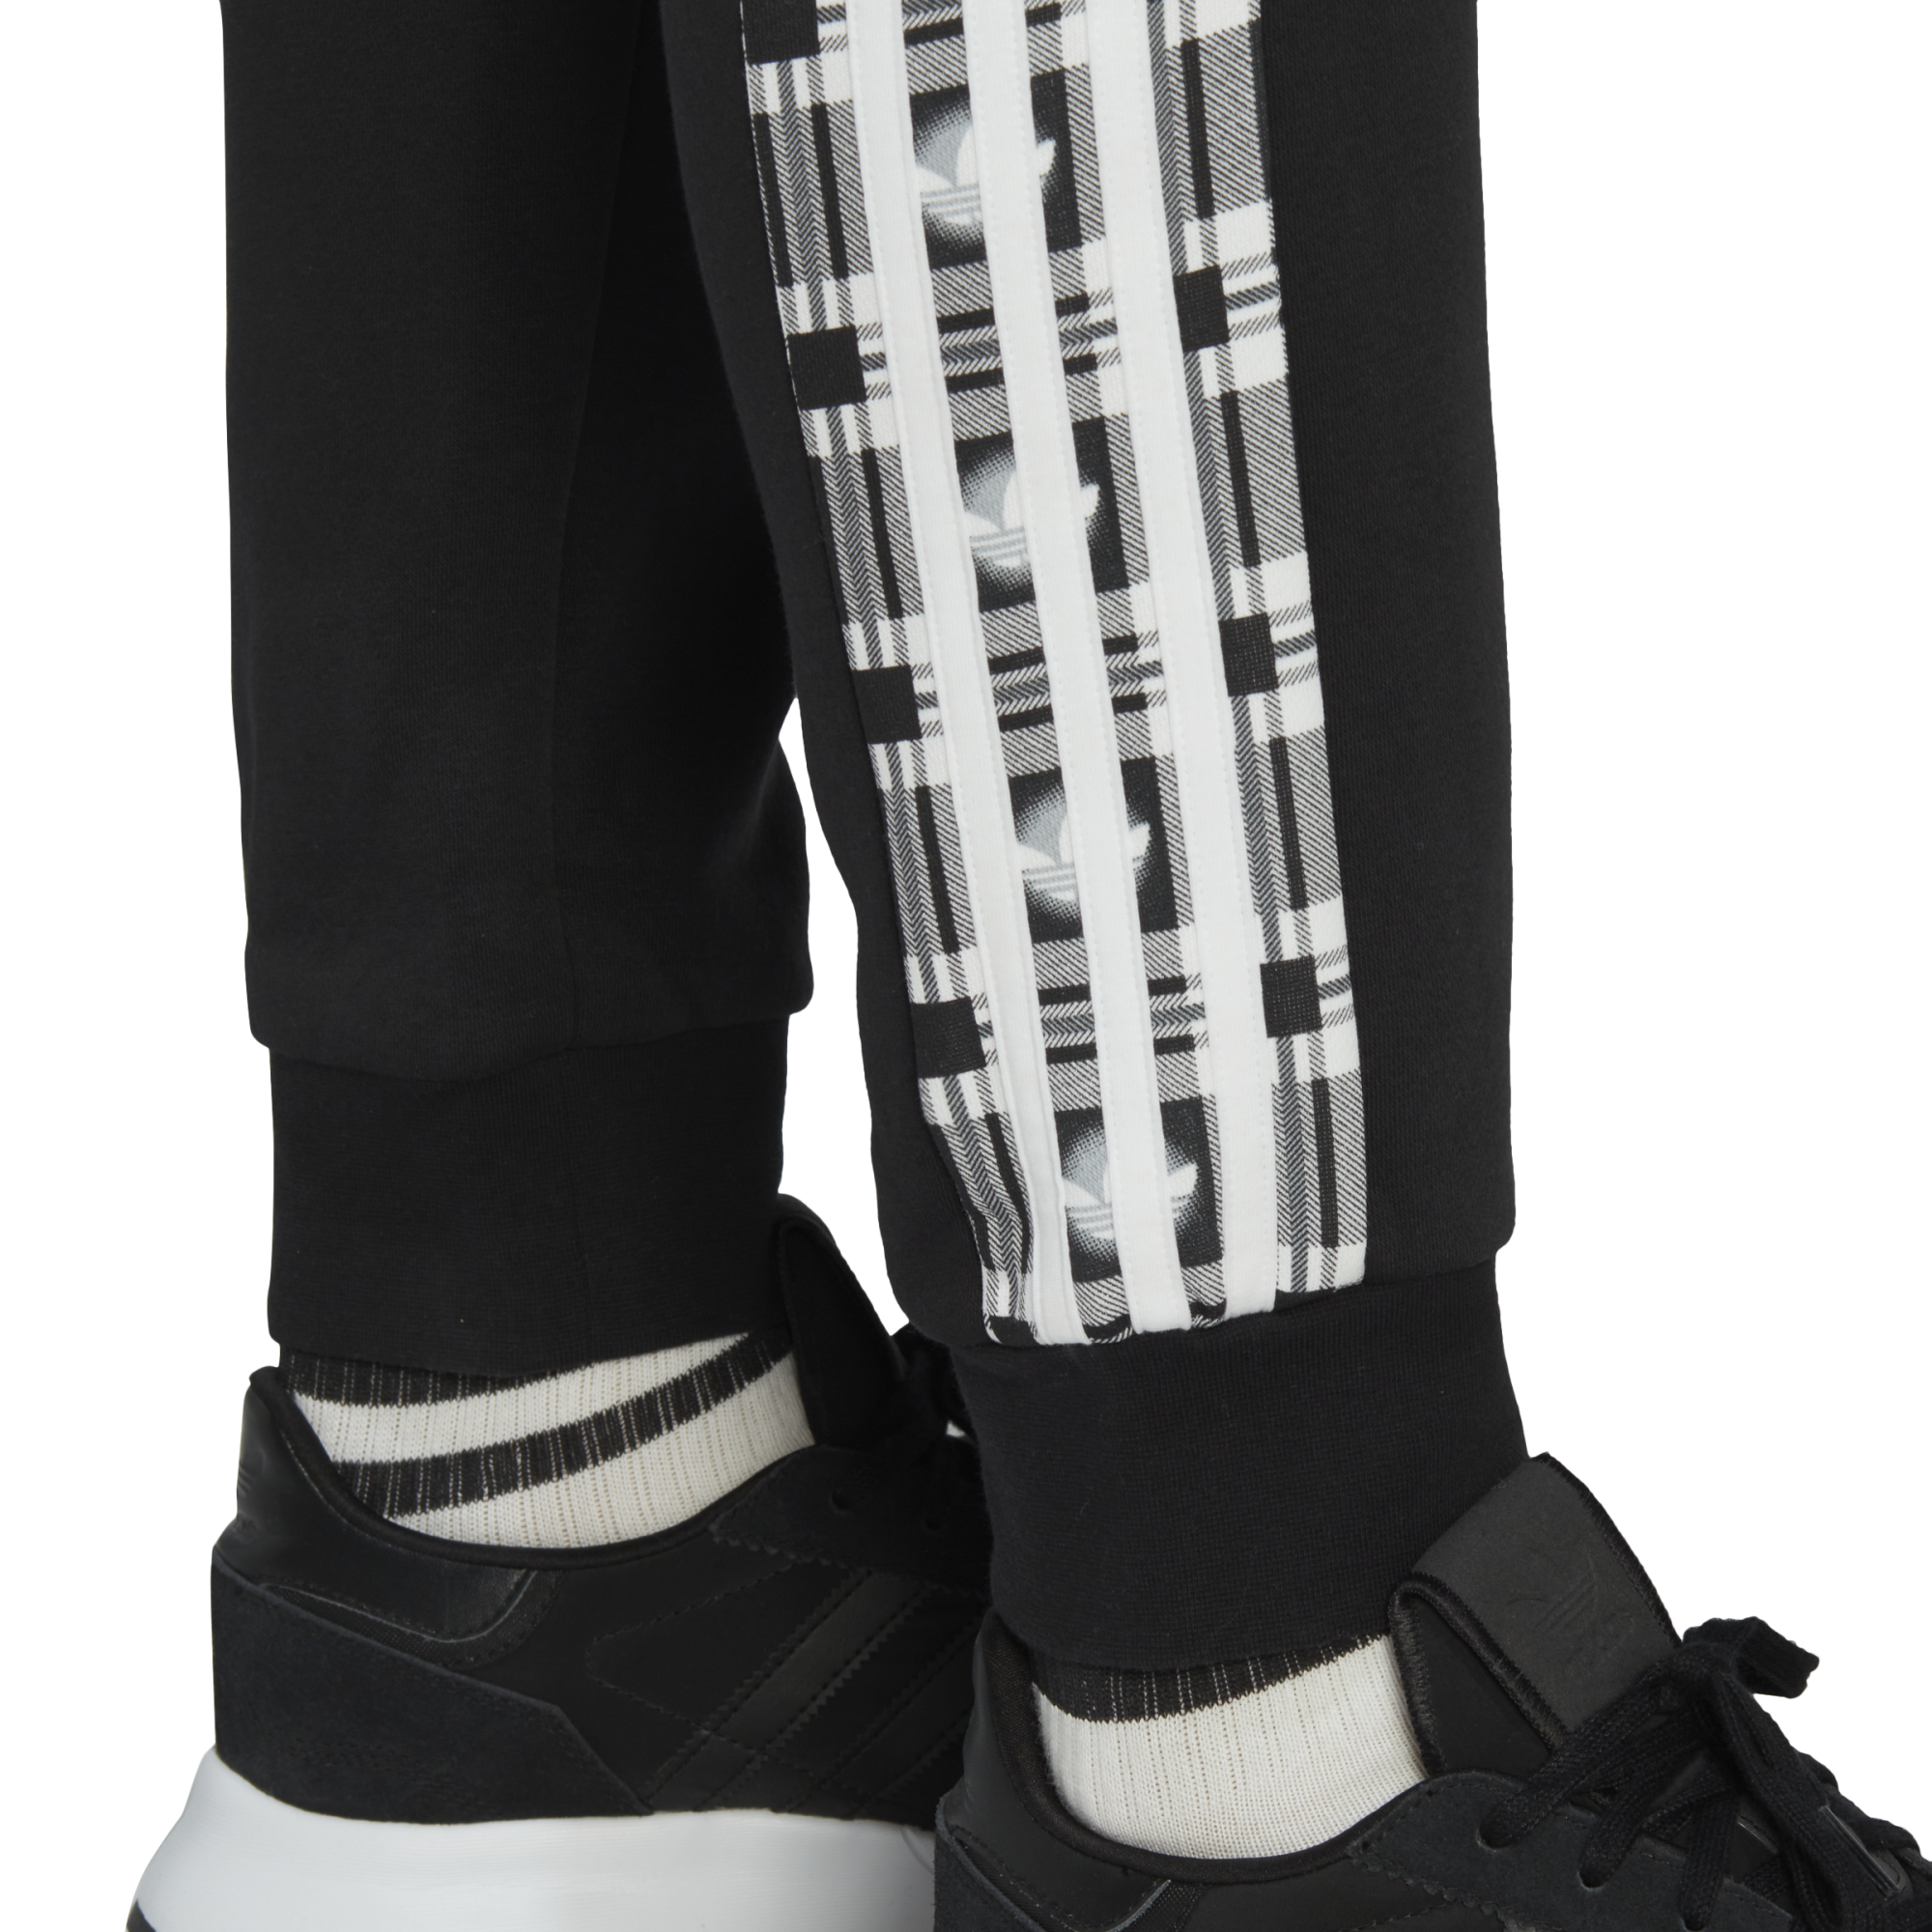 adidas Originals 3-Stripes Fleece Pants